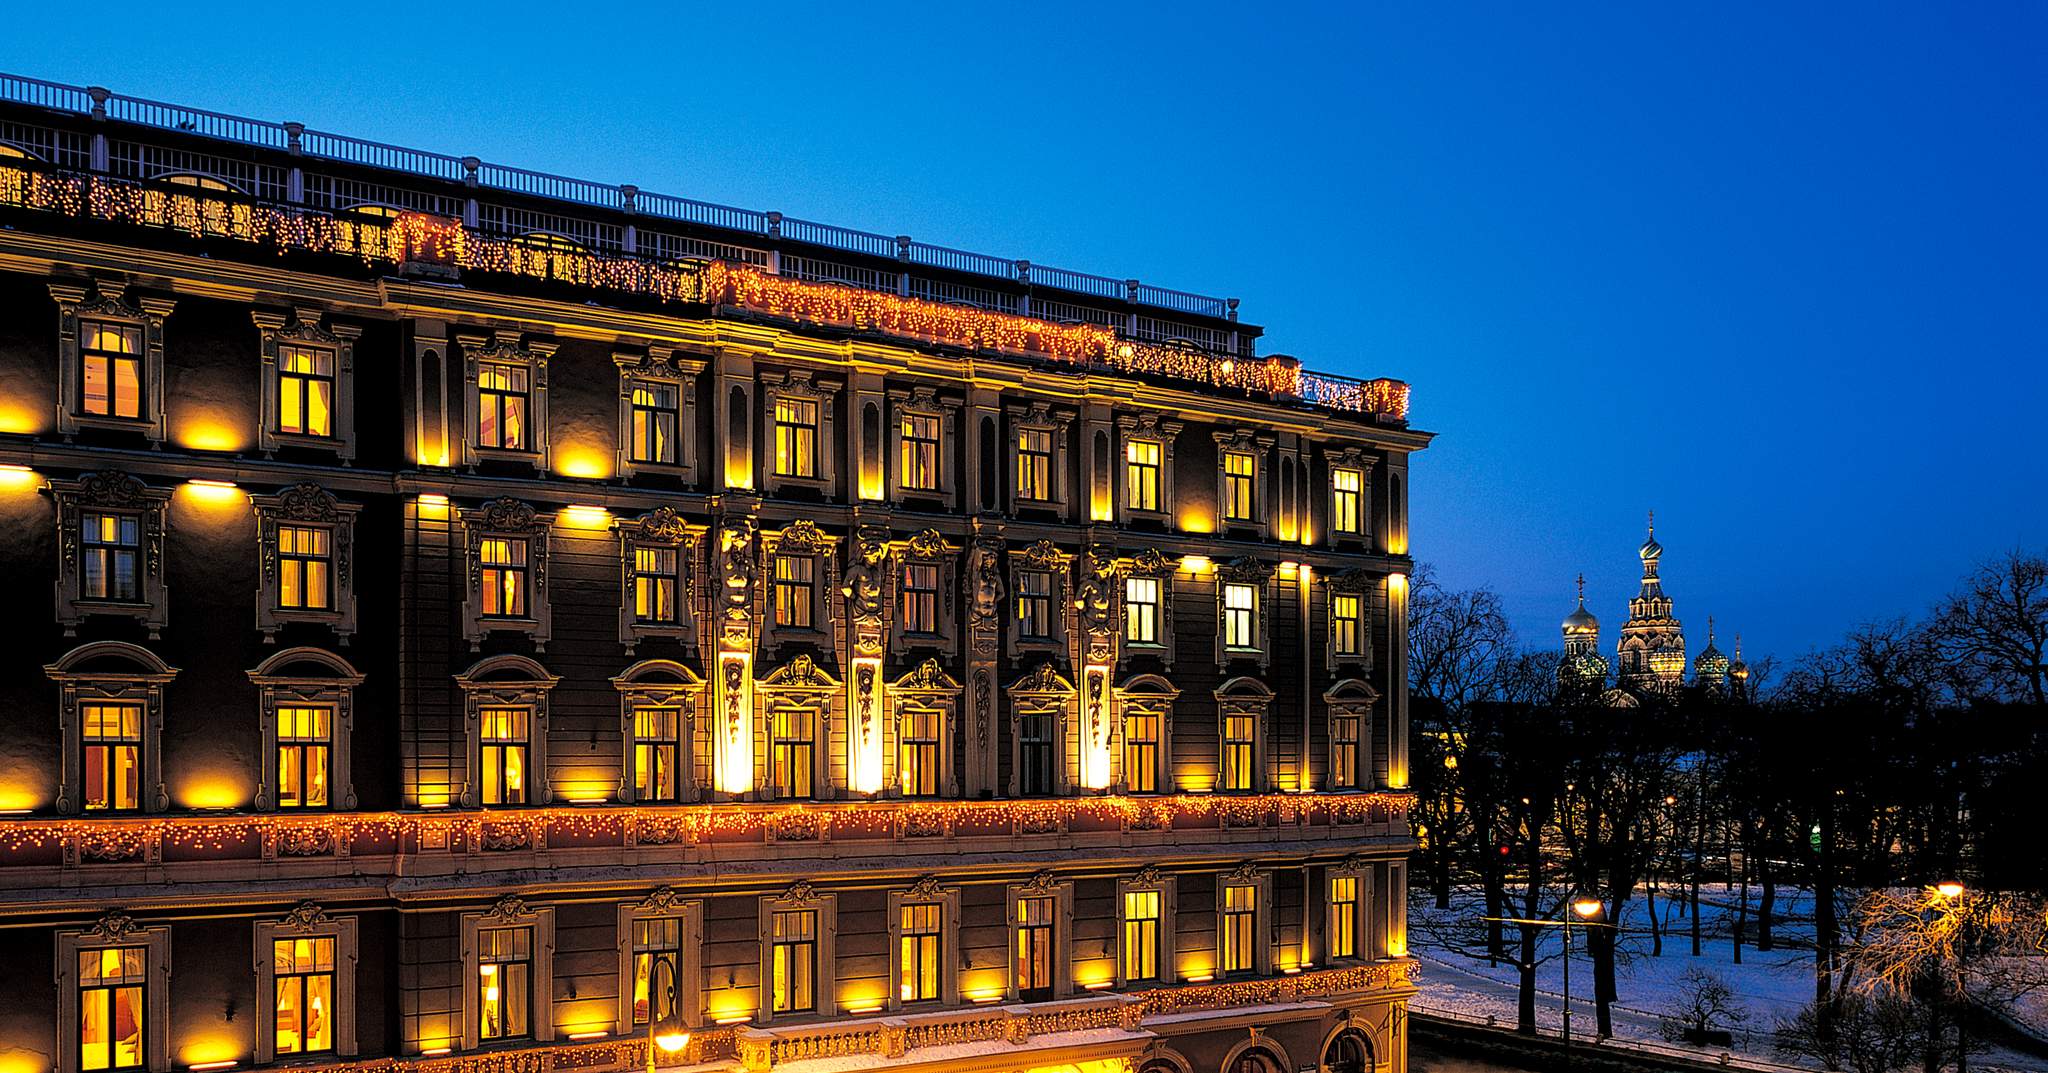 Presidential Suite at St. Petersburg's 5-star Belmond Grand Hotel